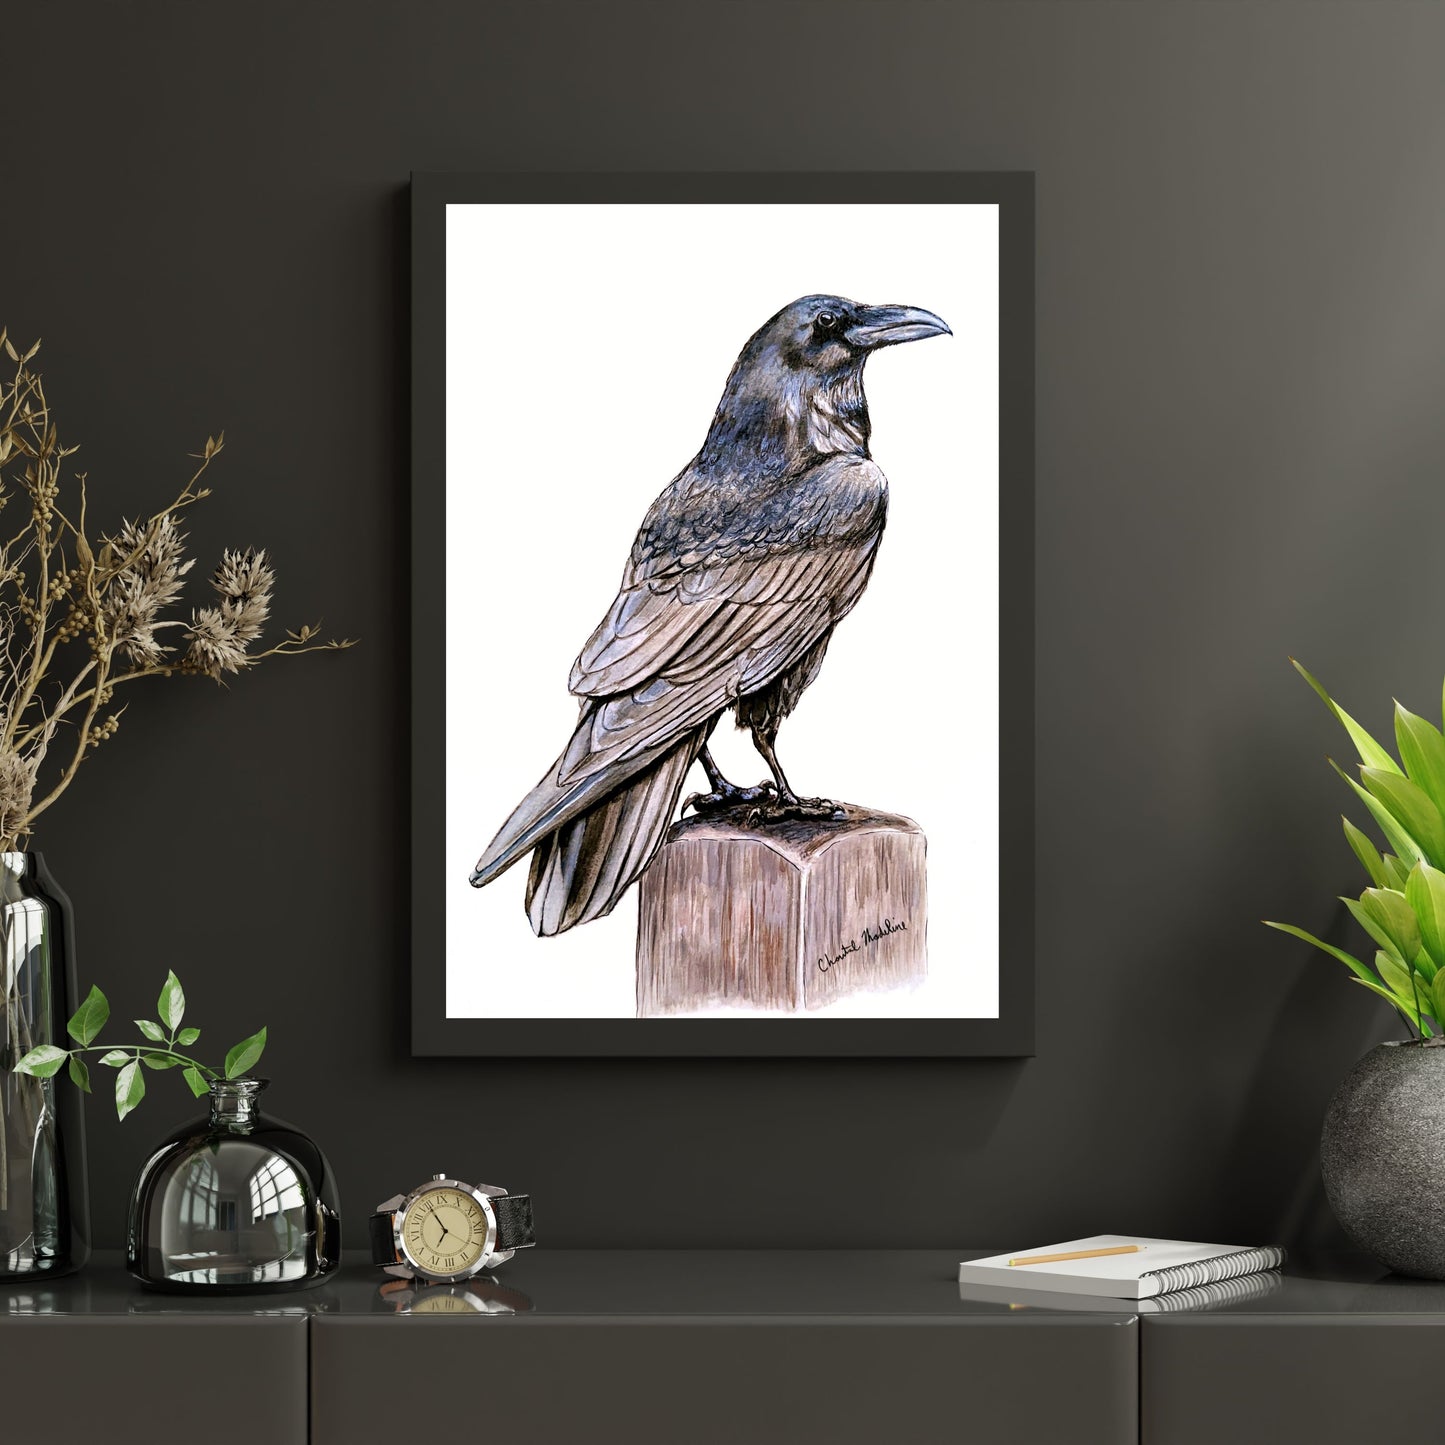 Raven art print, Ink drawing wall art, Raven poster, Gothic decor, Black bird print, Crow art print, Woodland home decor, Living room art